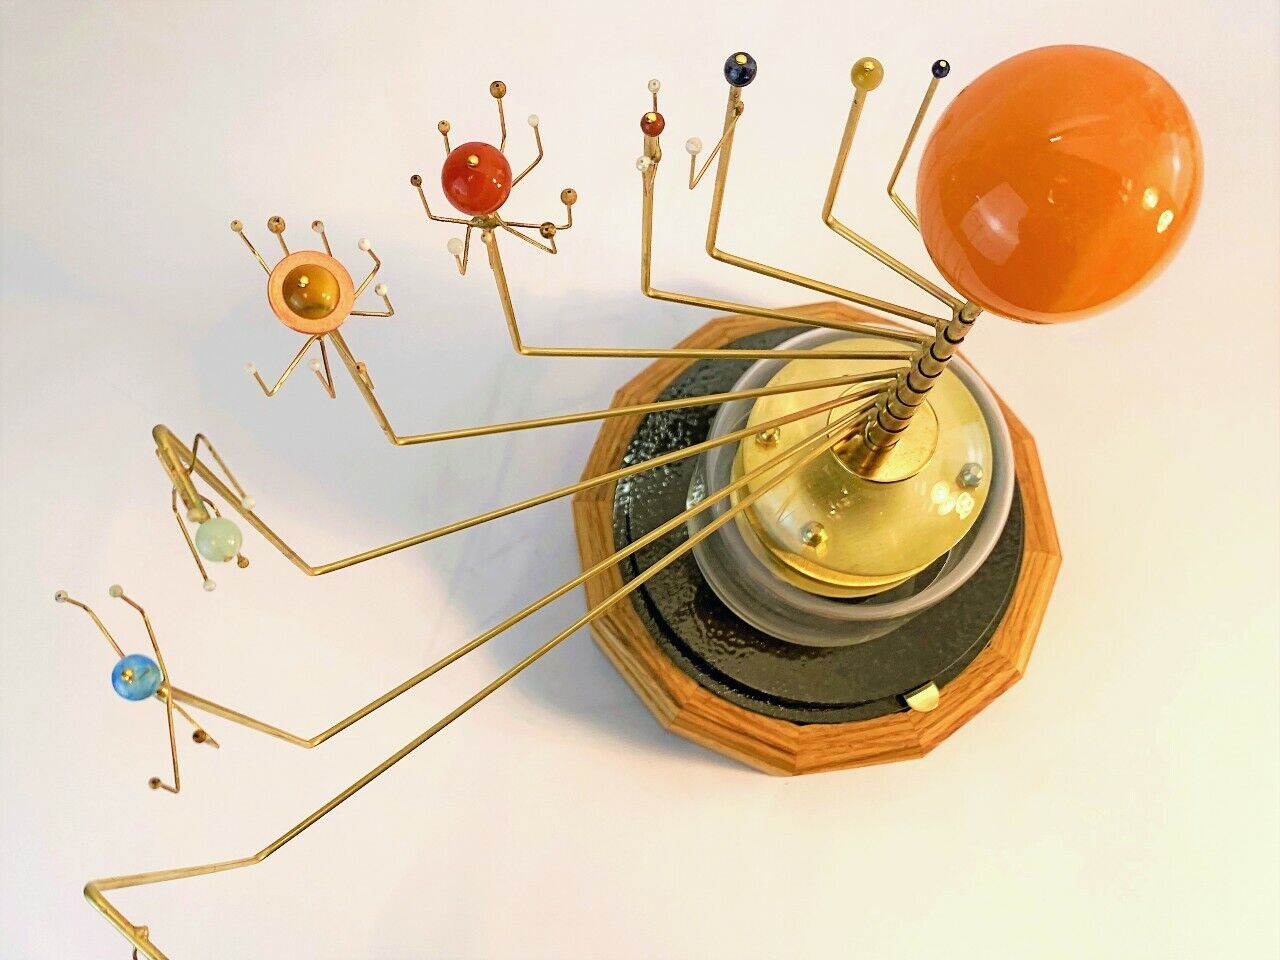 Orrery: Handcrafted Clockwork Solar System, Brass or Semi-Precious Stone Planets